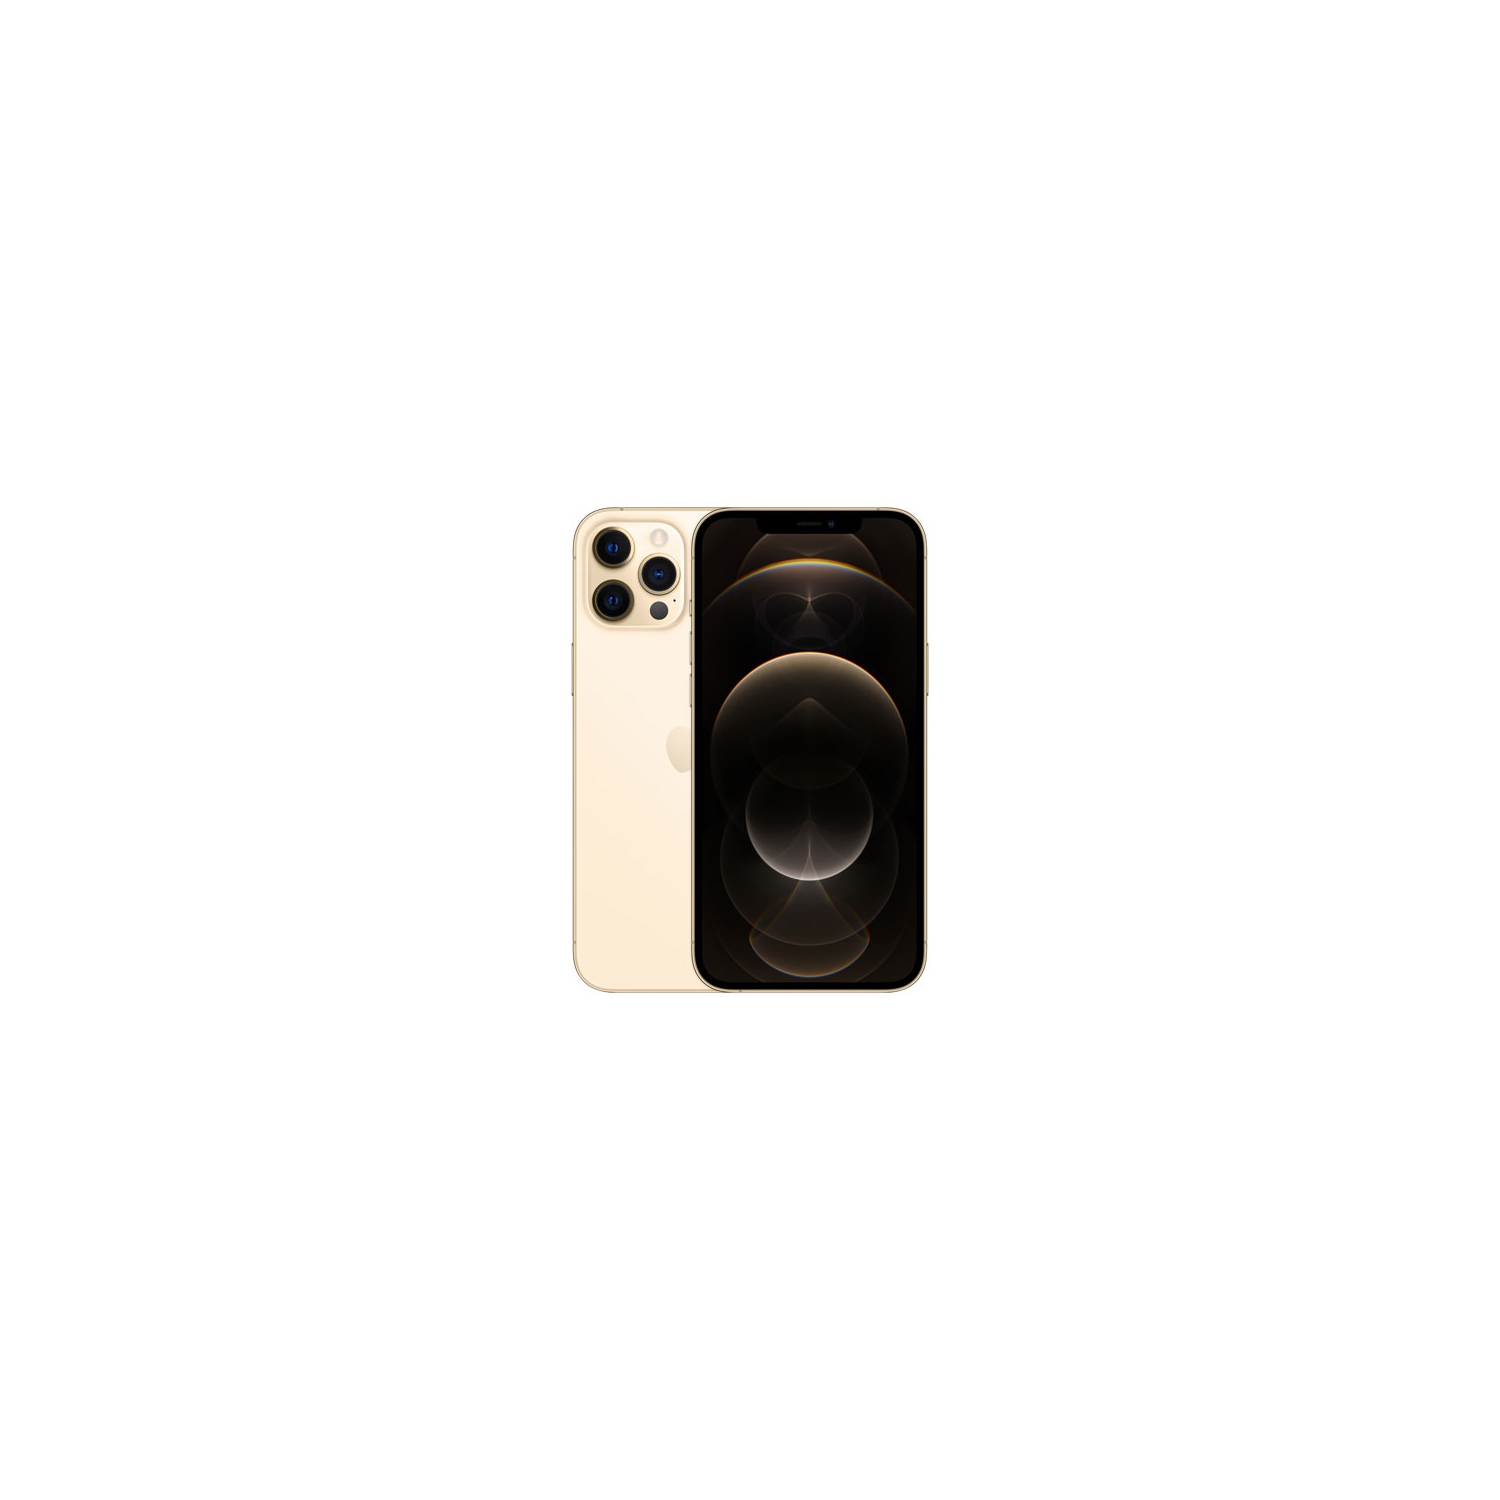 Apple iPhone 12 Pro Max 256GB Smartphone - Gold - Unlocked - Open Box